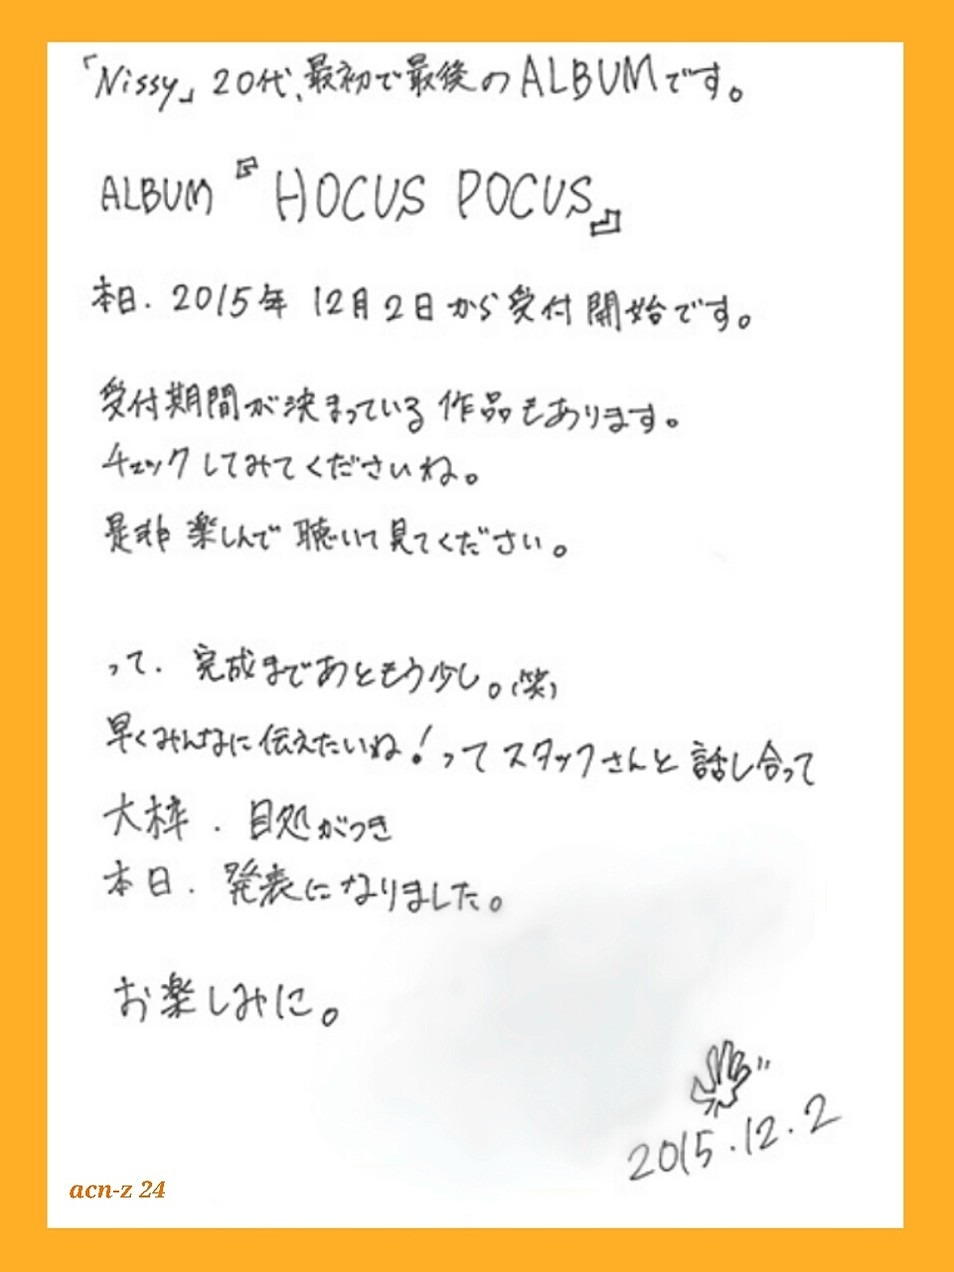 Nissy 1st ALBUM「HOCUS POCUS」発売決定[50346504]｜完全無料画像検索 